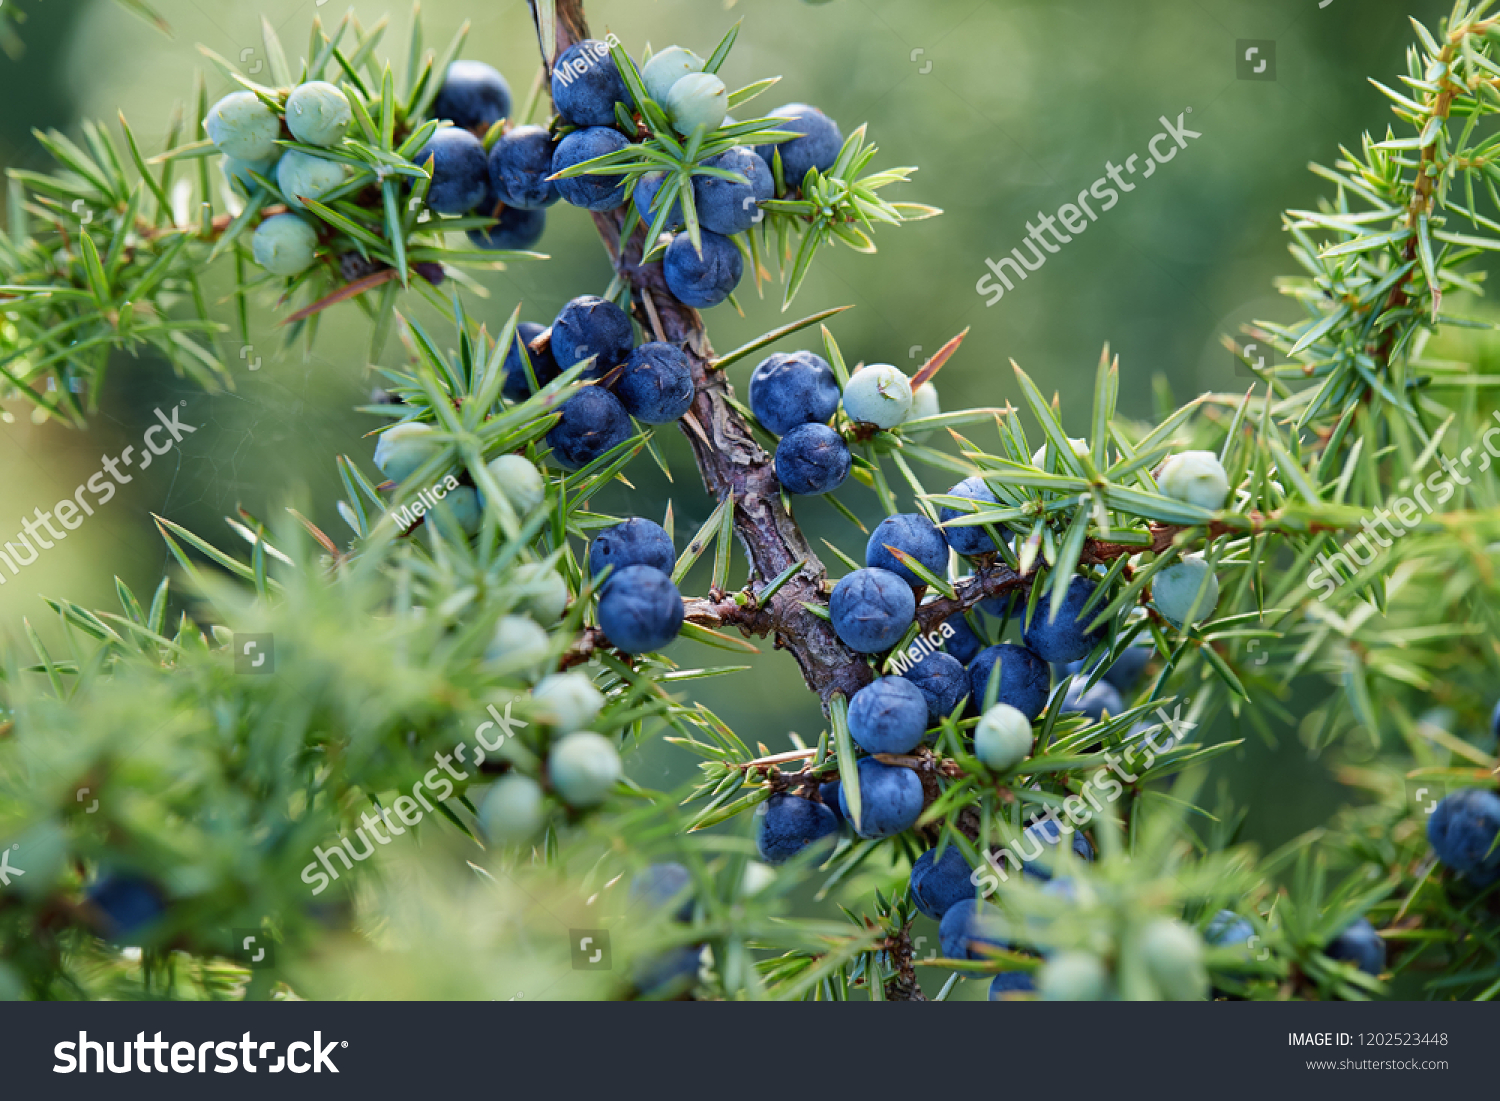 Close-Up Of Juniper Berries Growing On Tree.  Juniper branch with blue and green berries growing outside. #1202523448